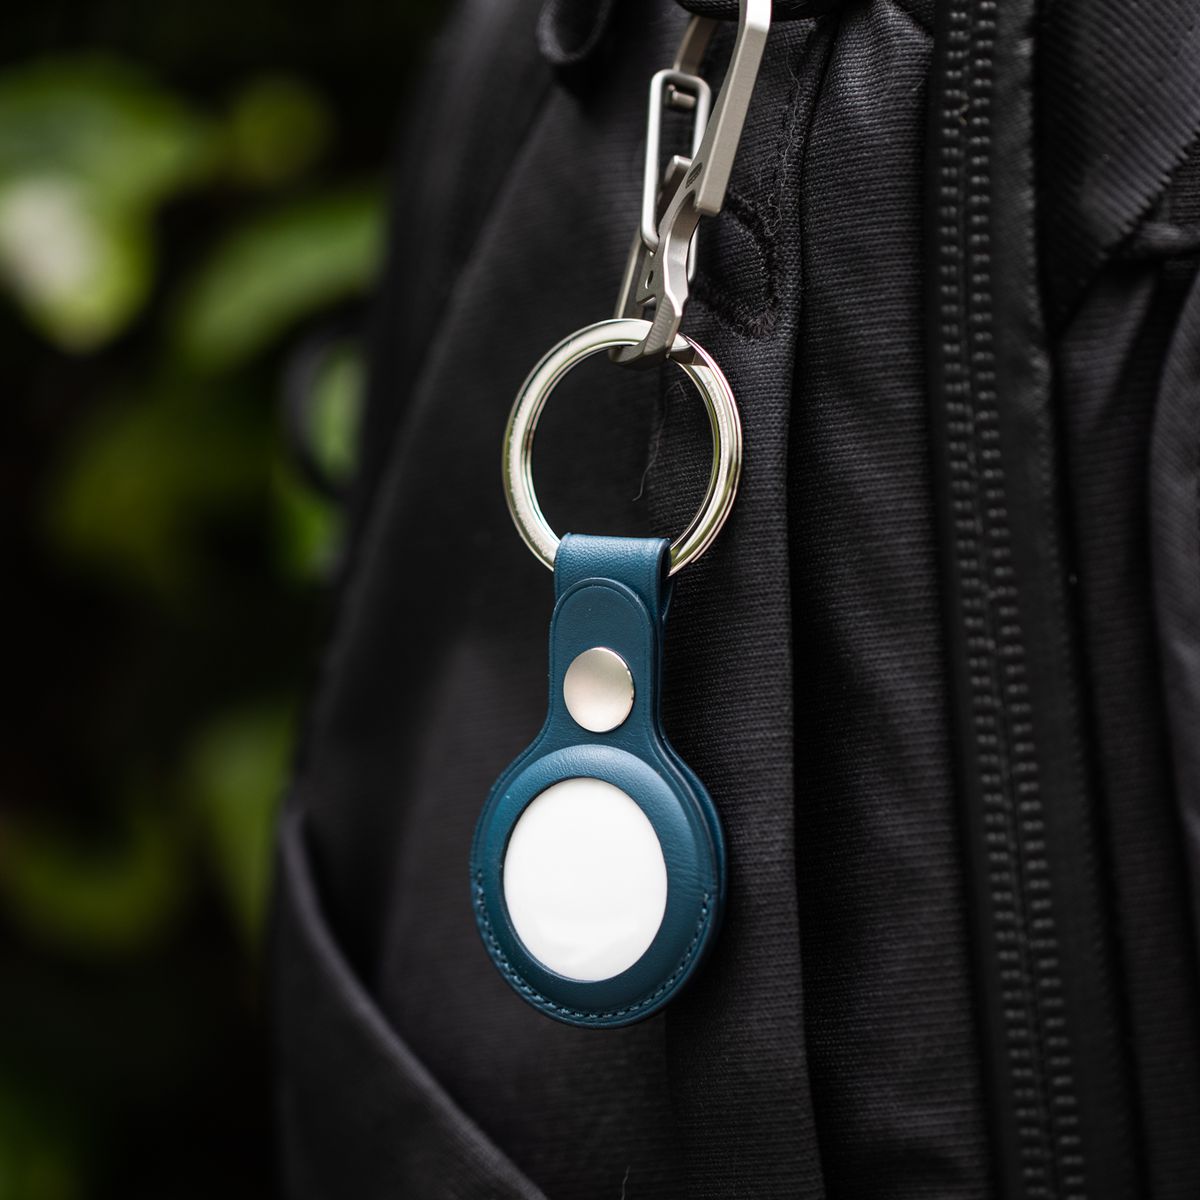 An AirTag in an Apple keychain accessory